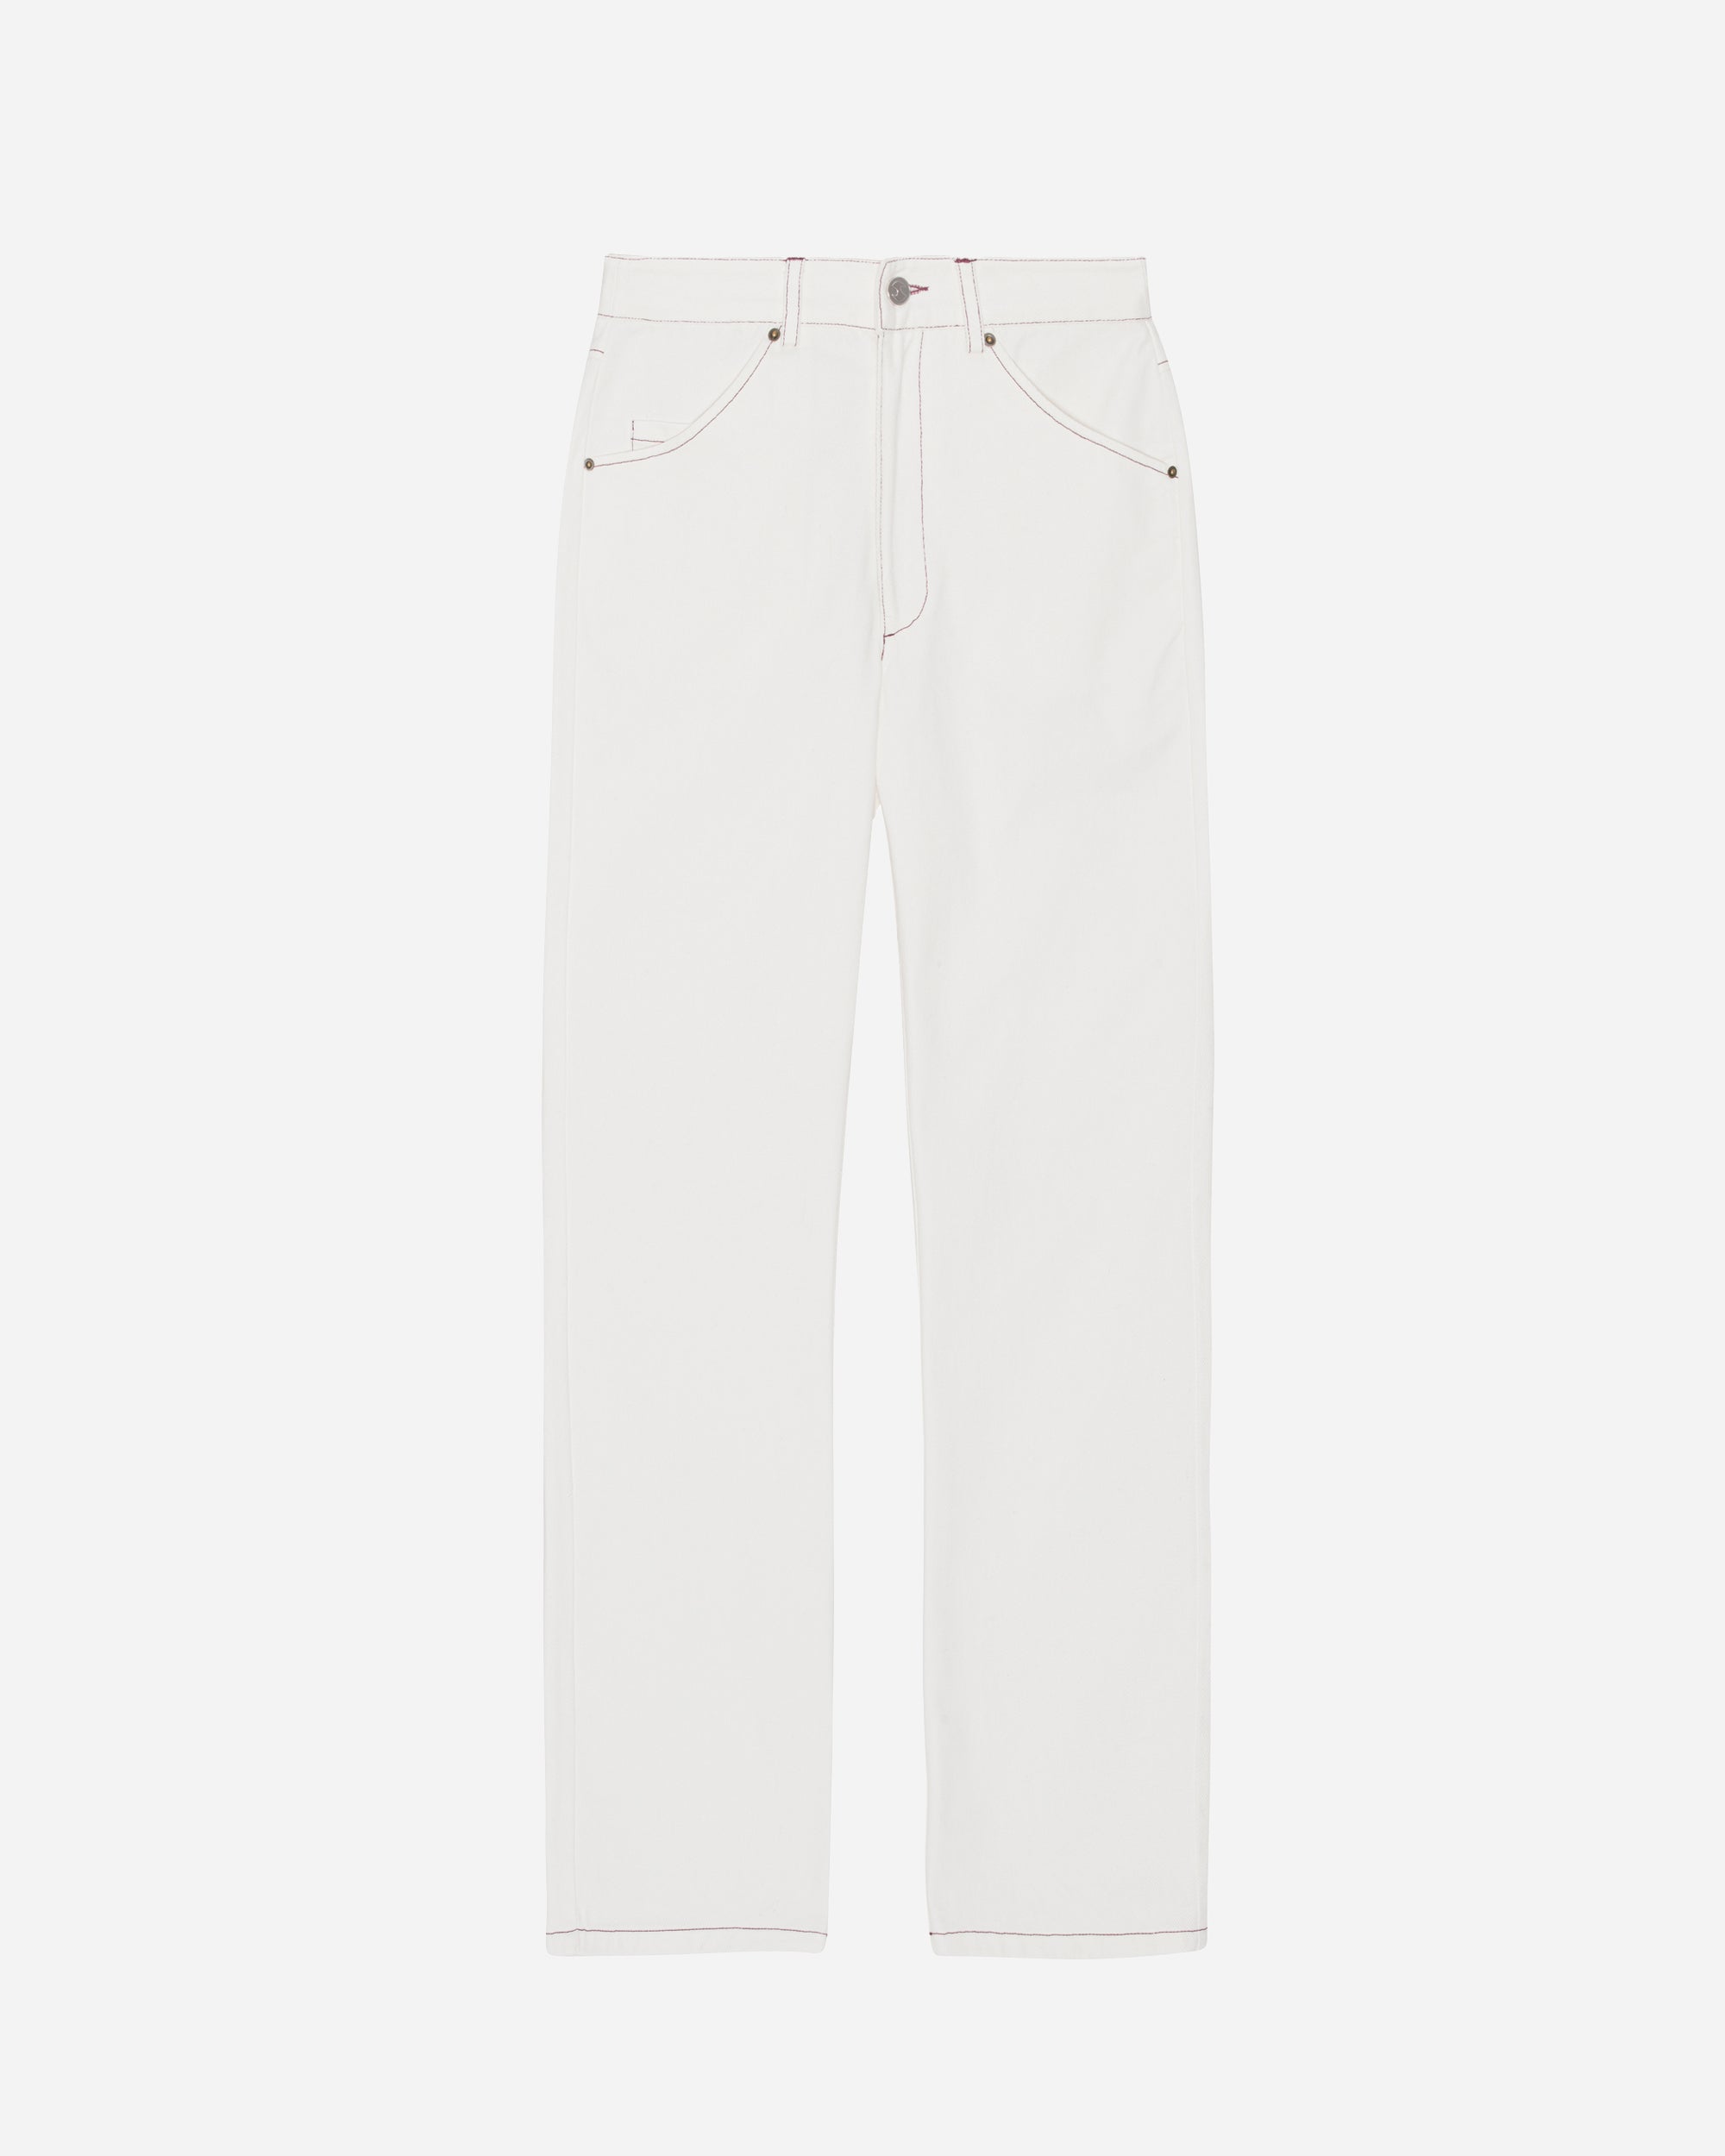 OpéraSPORT Finley Jeans WHITE M14-WHT